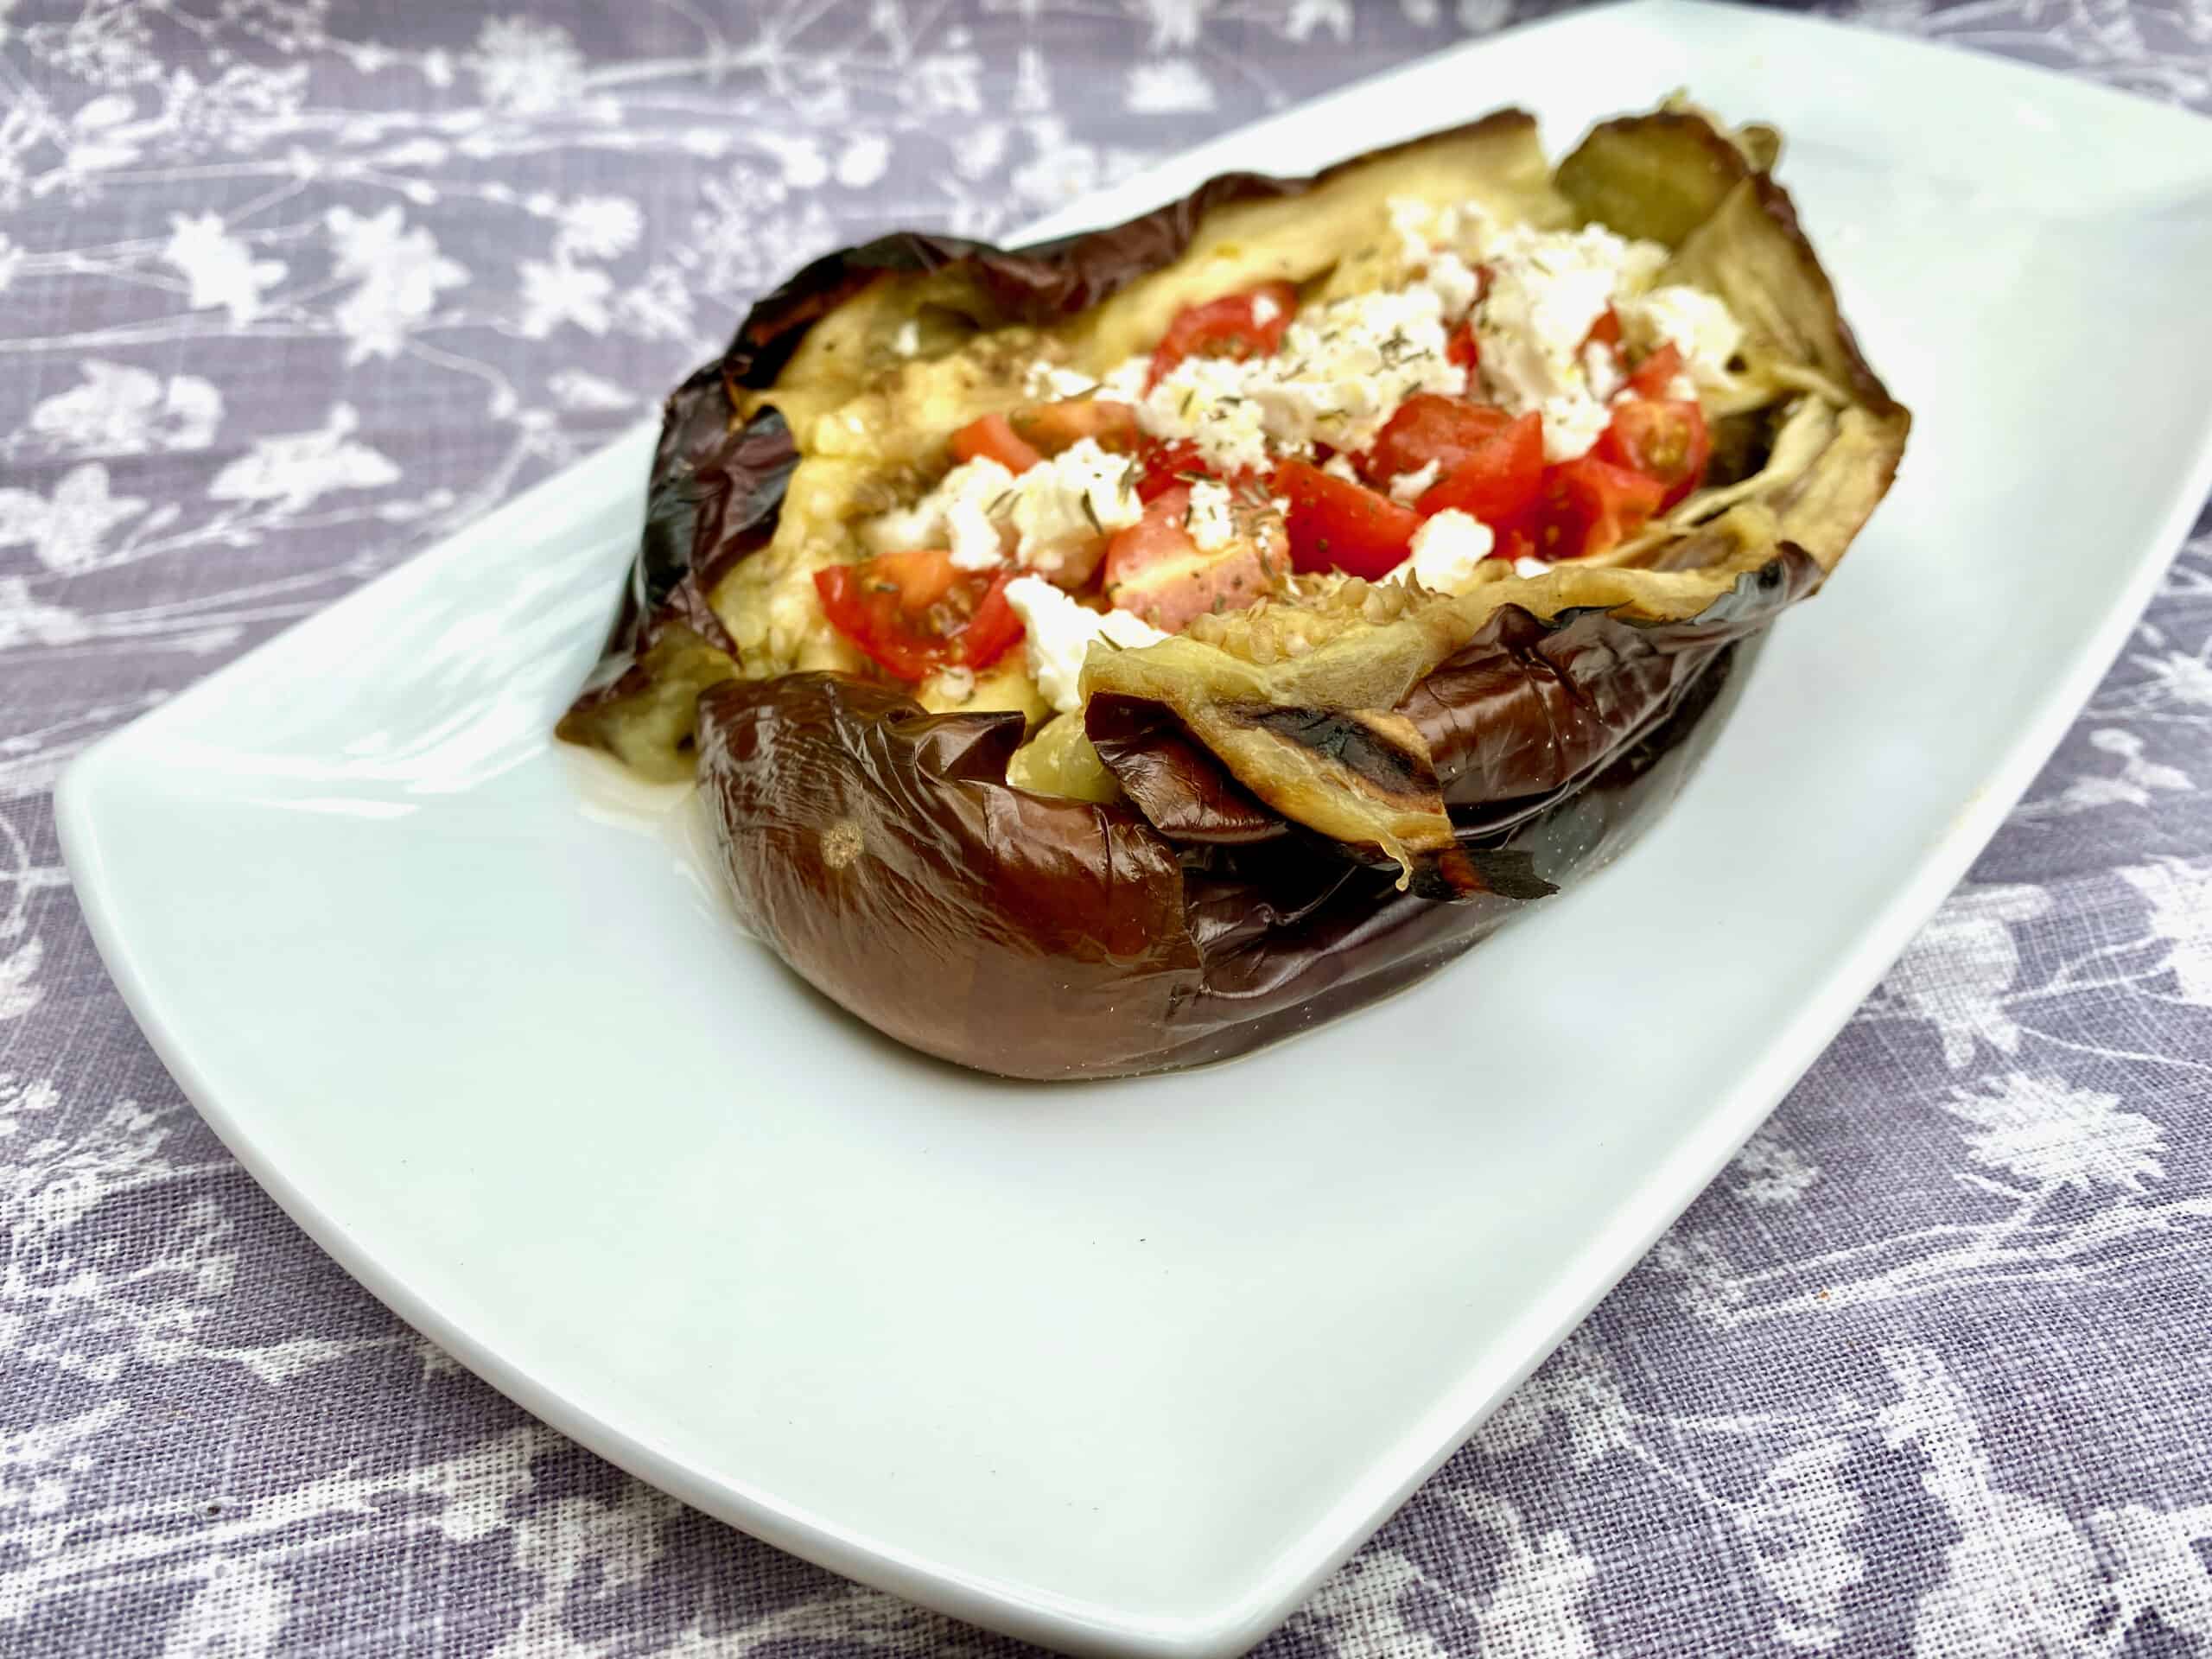 Greek smoked aubergine (eggplant) (Melitzanosalata)